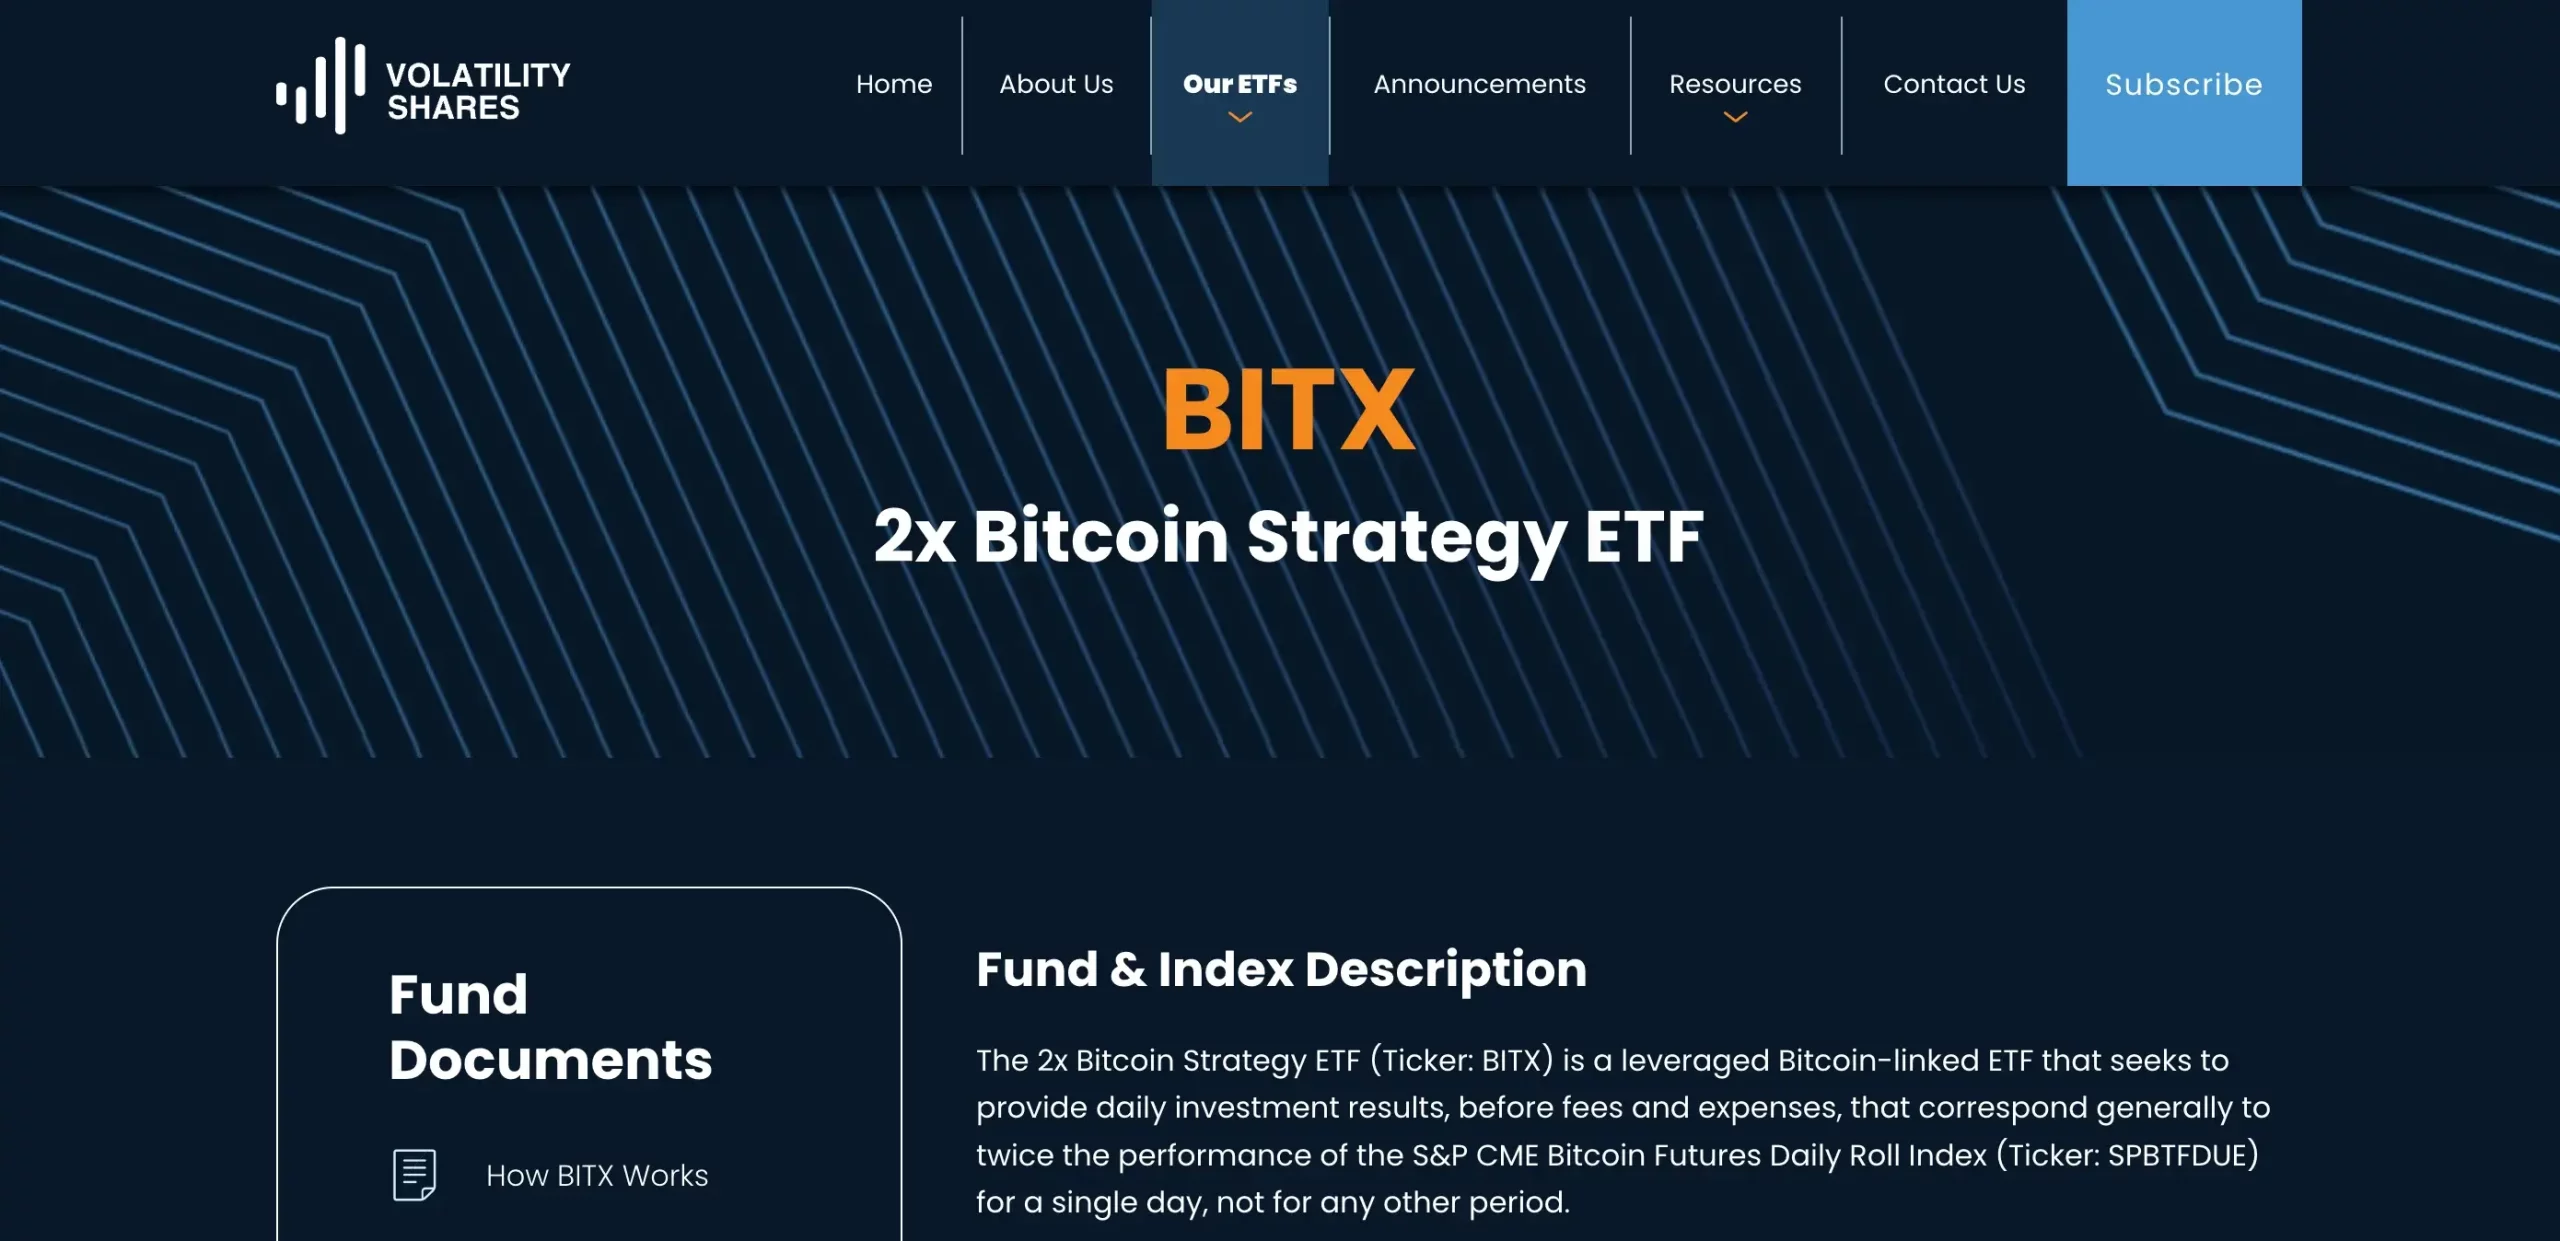 4. Volatility Shares 2x Bitcoin ETF (BITX)